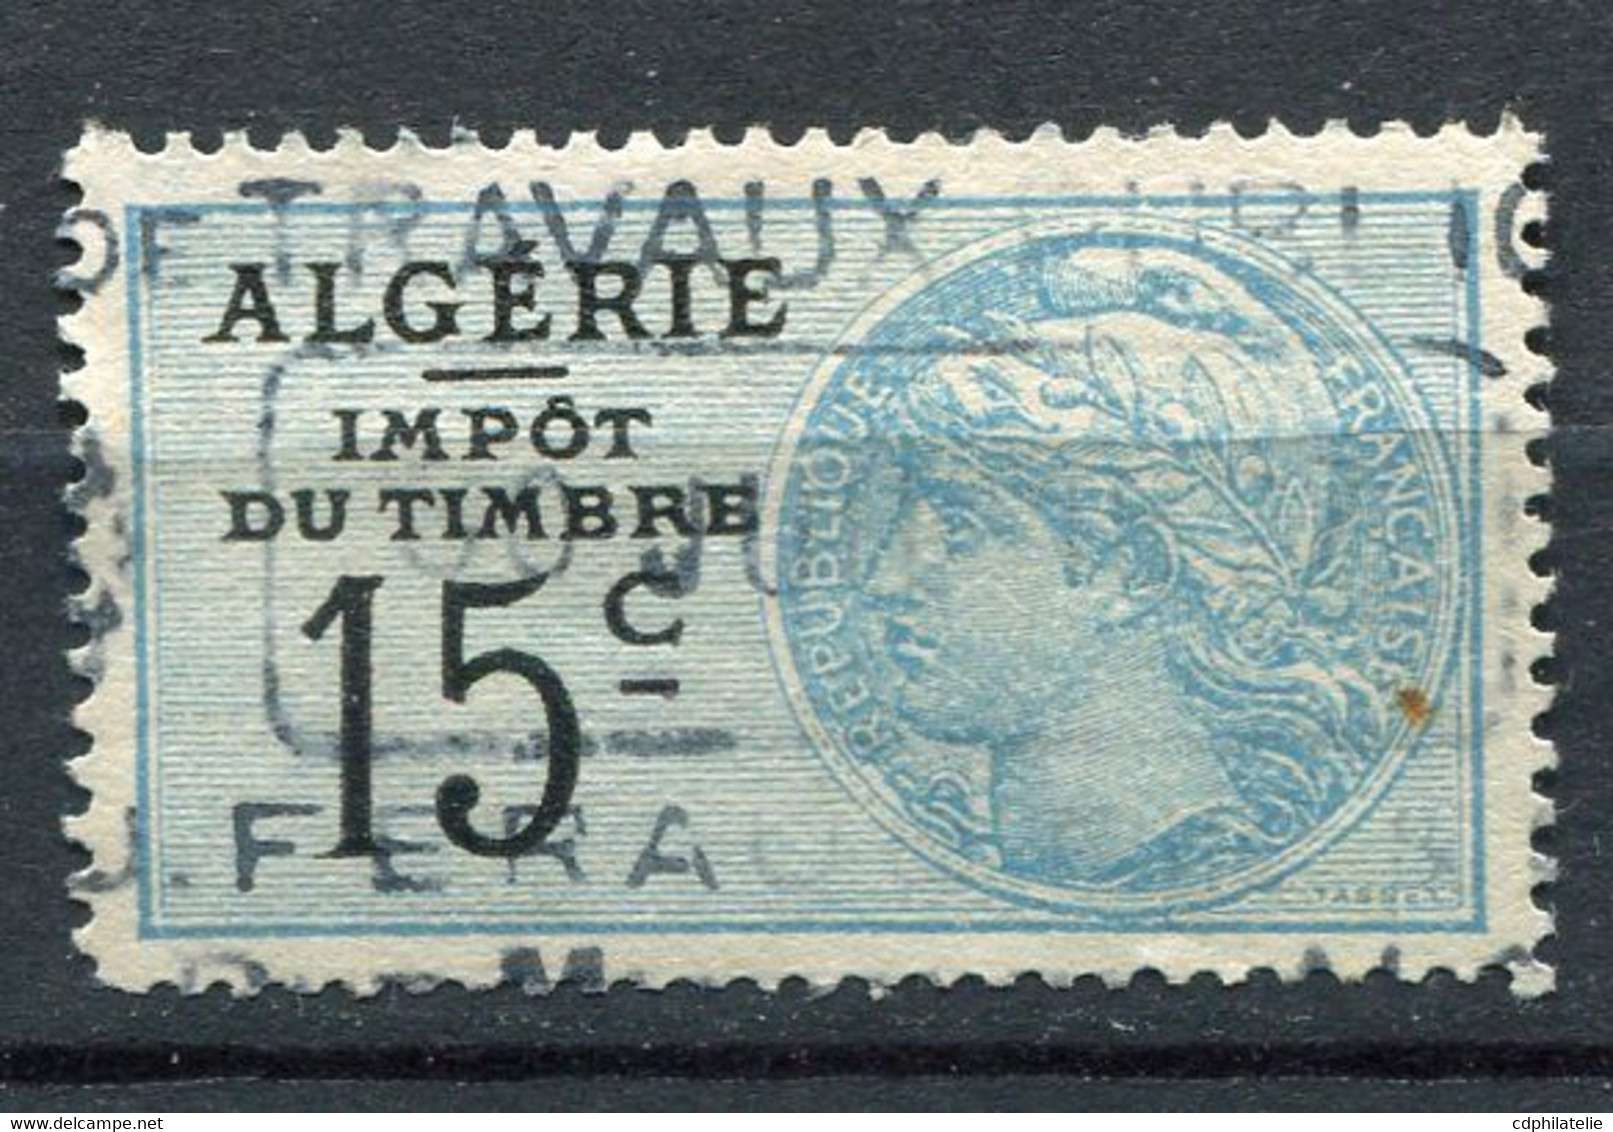 ALGERIE TIMBRE FISCAL " ALGERIE IMPOT DU TIMBRE 15c " OBLITERE - Used Stamps